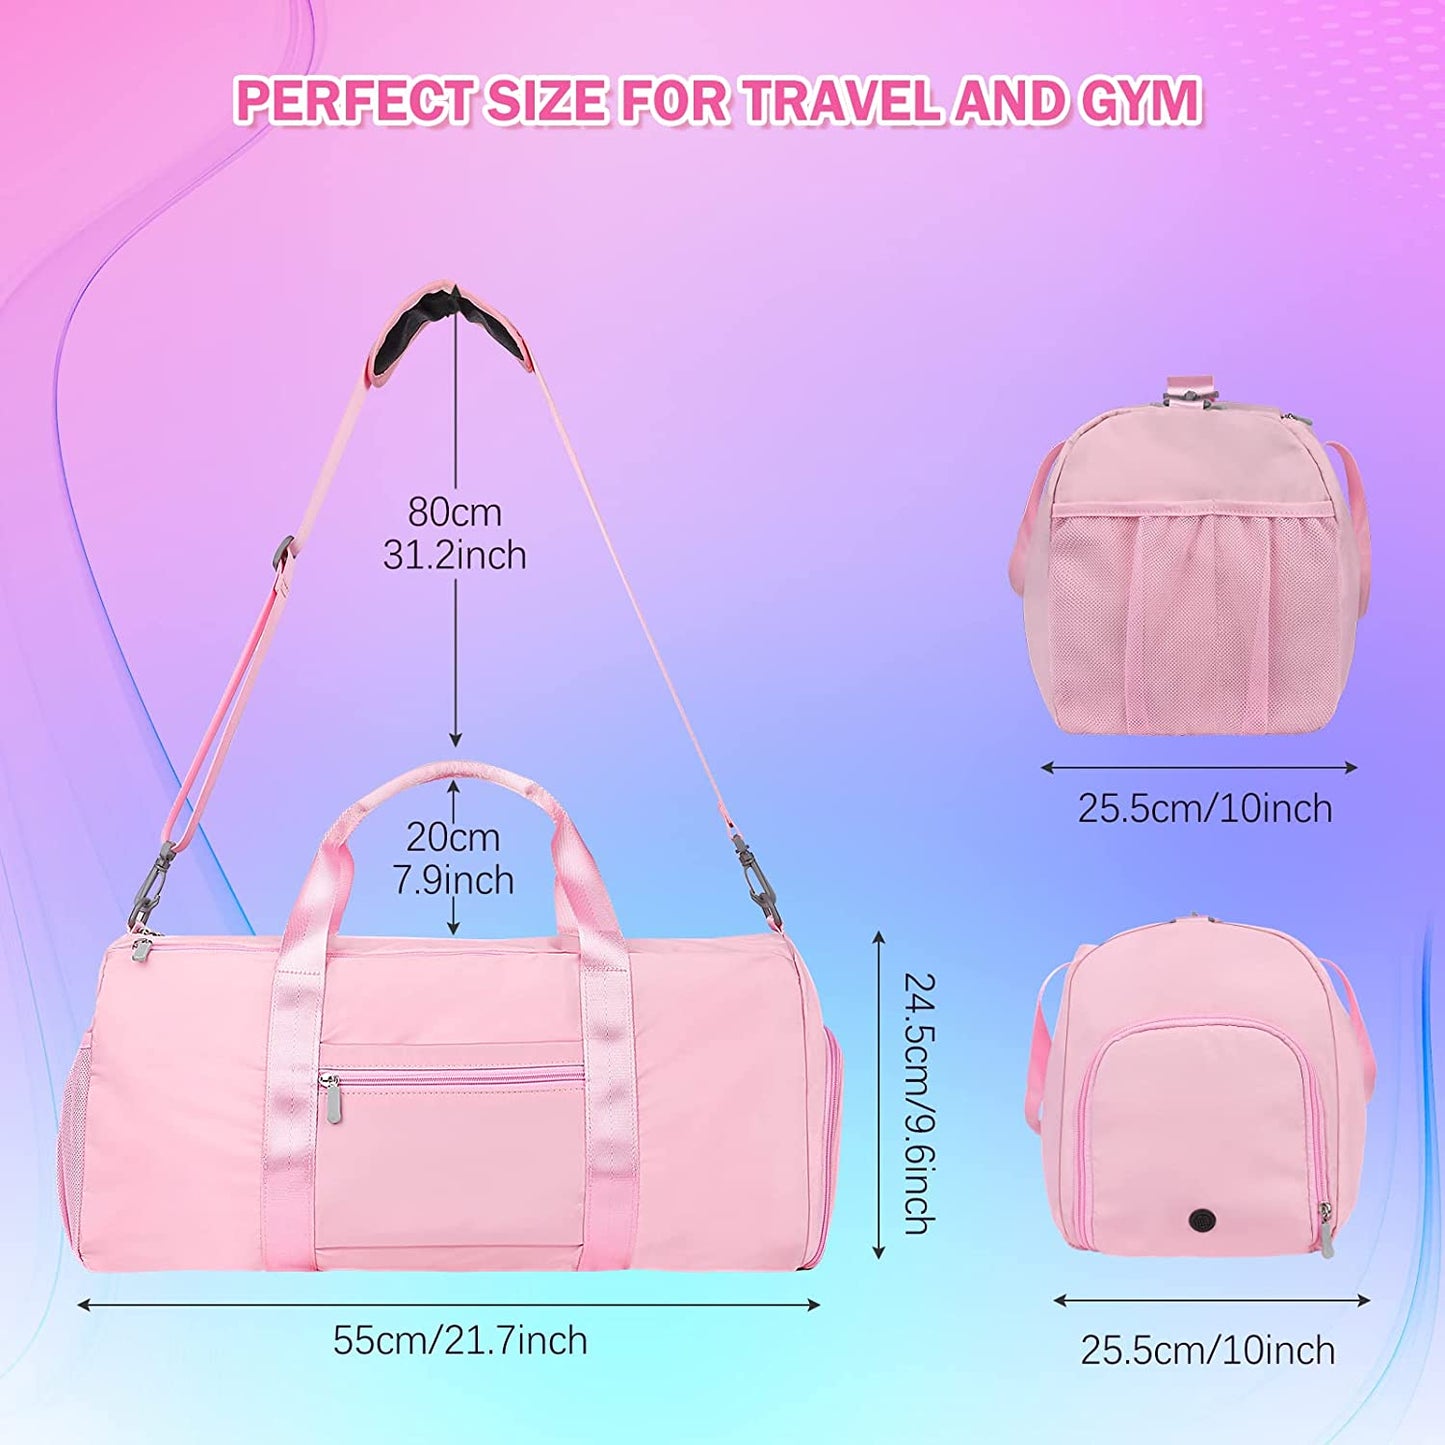 SAMIT -Gym Bag-35L Duffel Bag Large Sports Gym Bag for Women Waterproof Travel Bag Carry on Bag Overnight Weekend Bag Girl Dance Bag with Wet Pocket & Shoe Compartment(Pink)